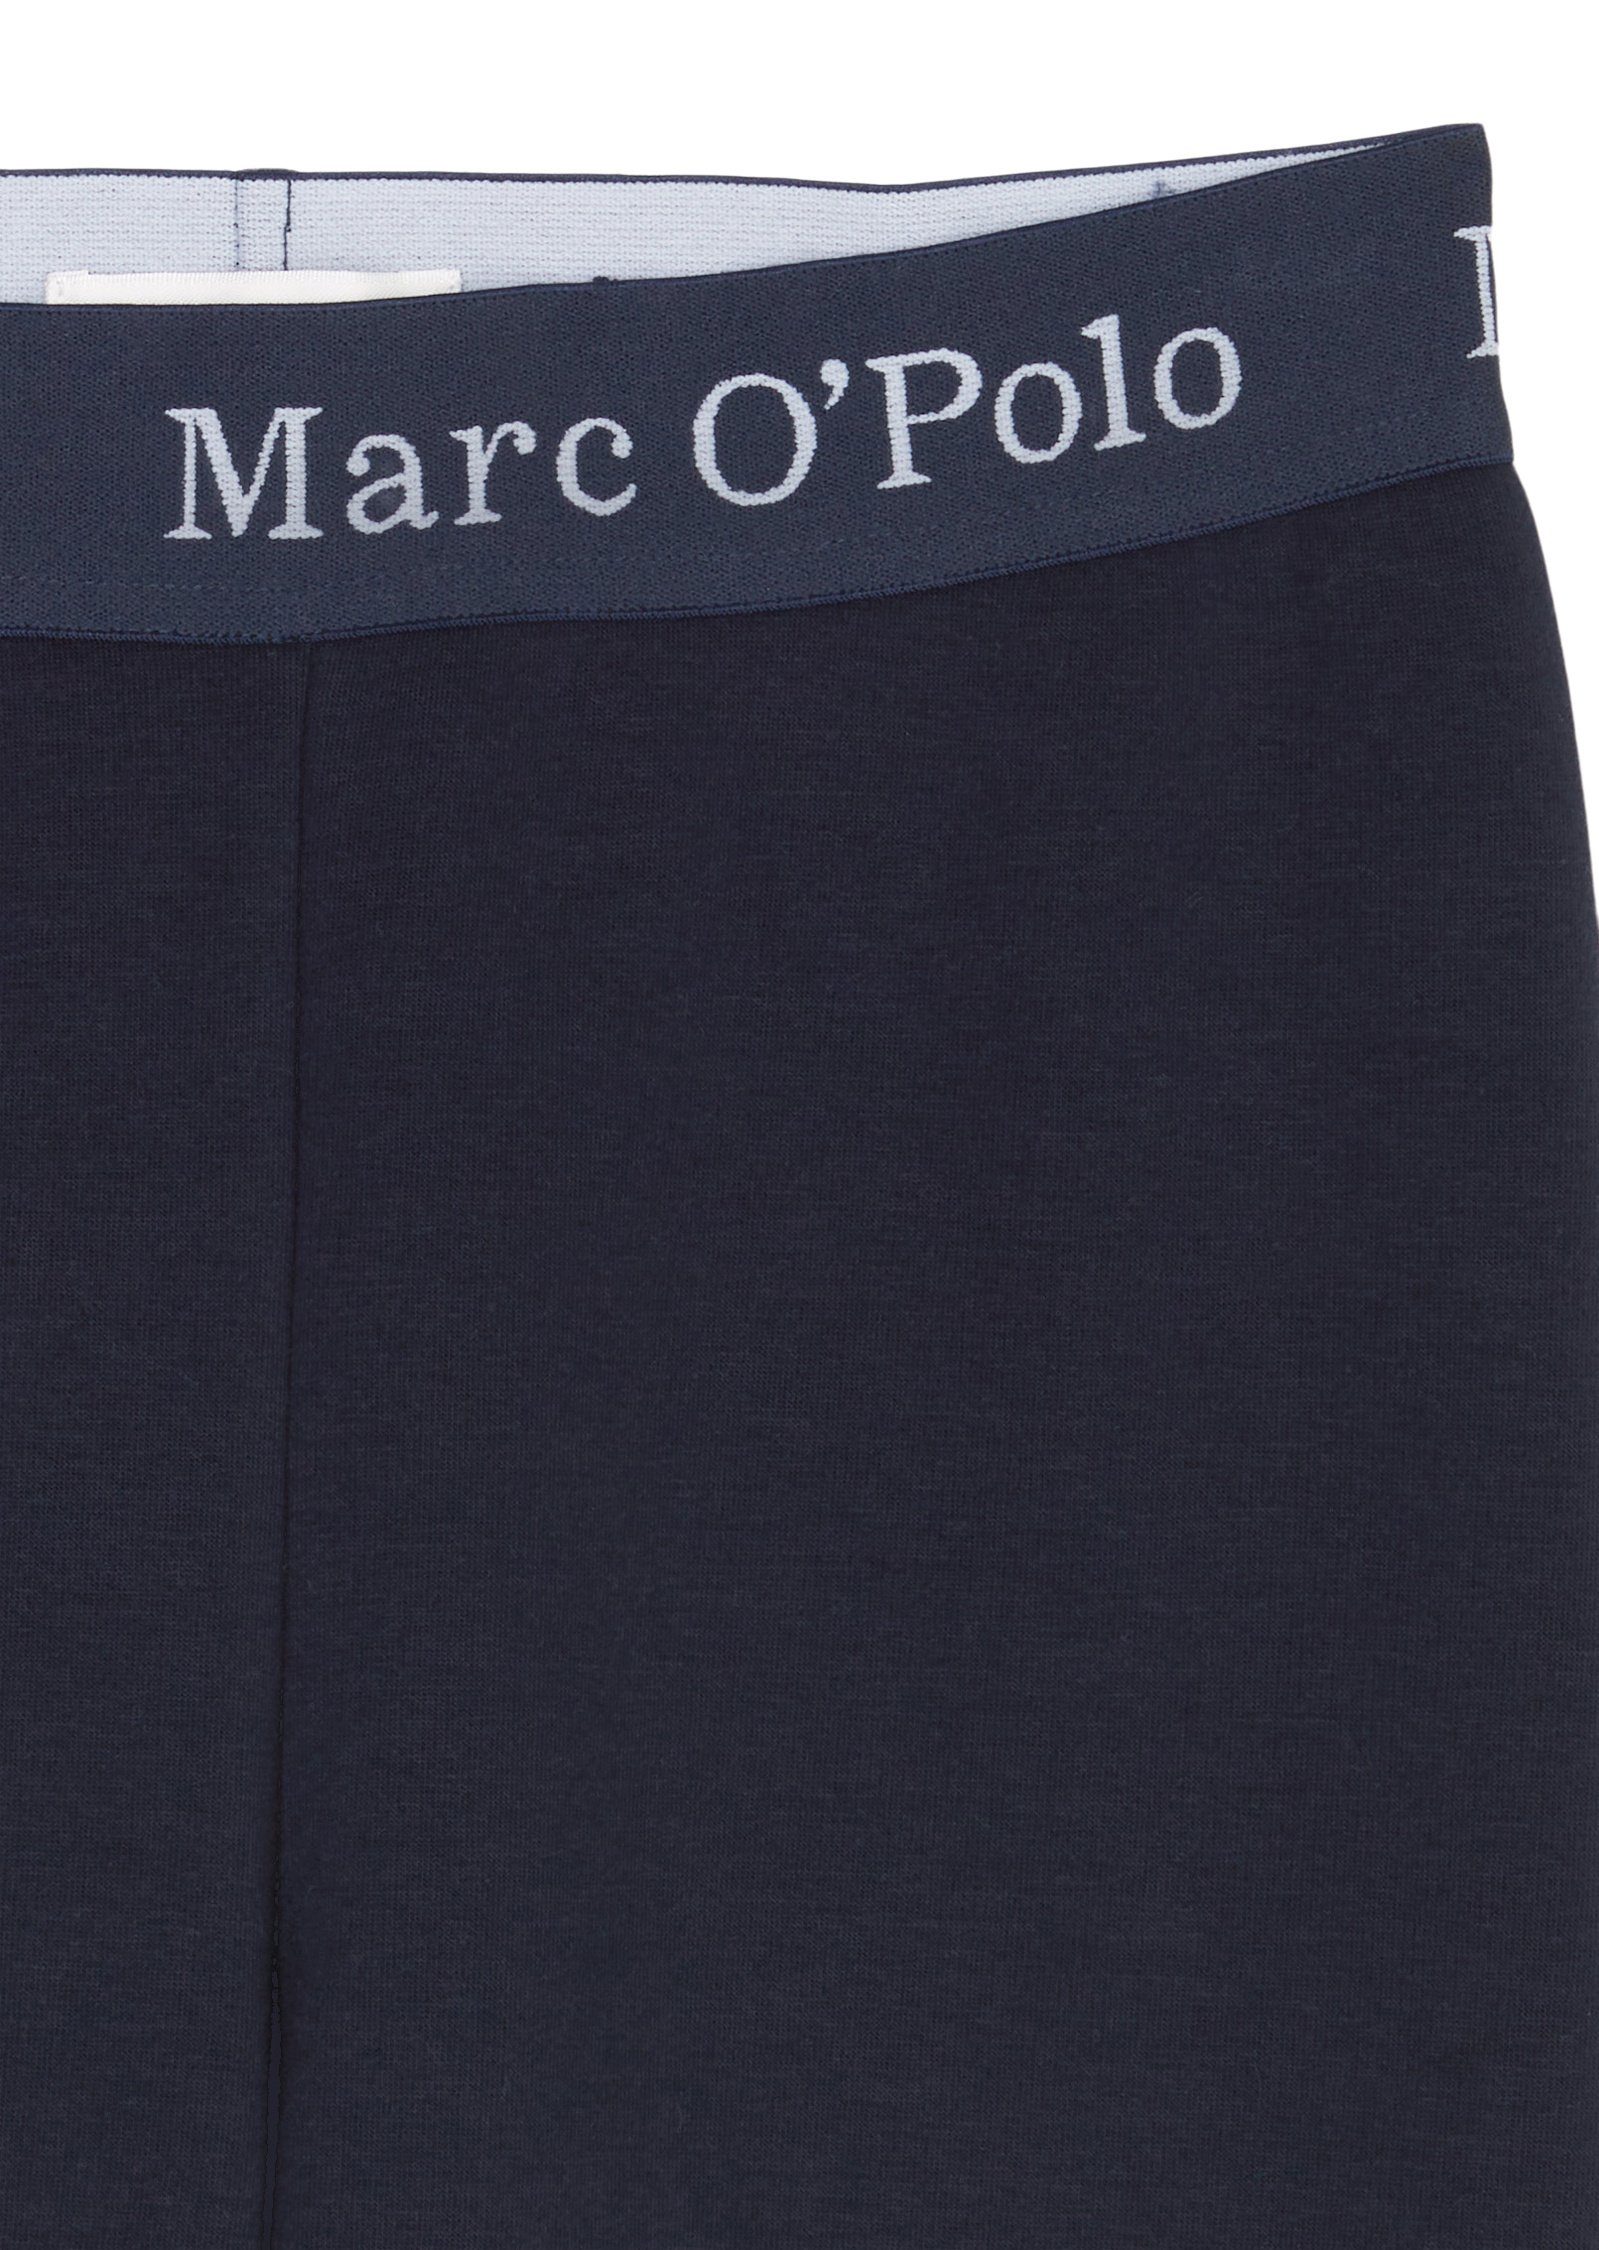 Jerseyhose aus O'Polo Marc warmem Baumwoll-Mix